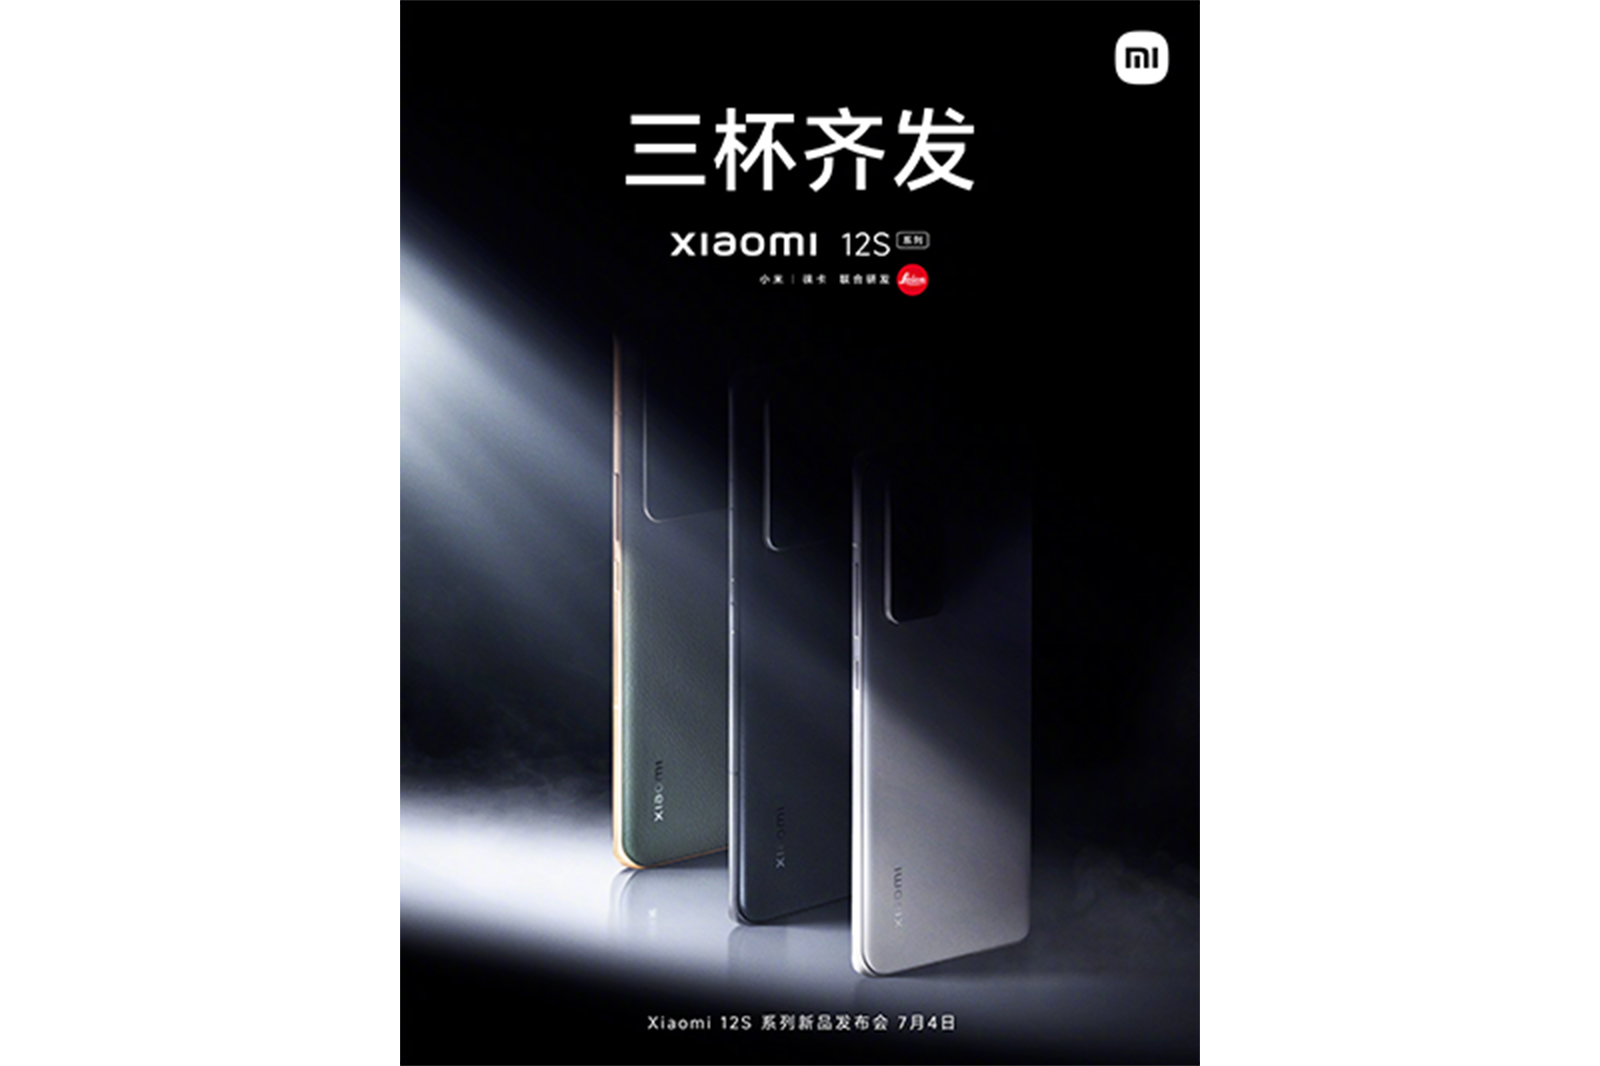 xiaomi 12s series launch